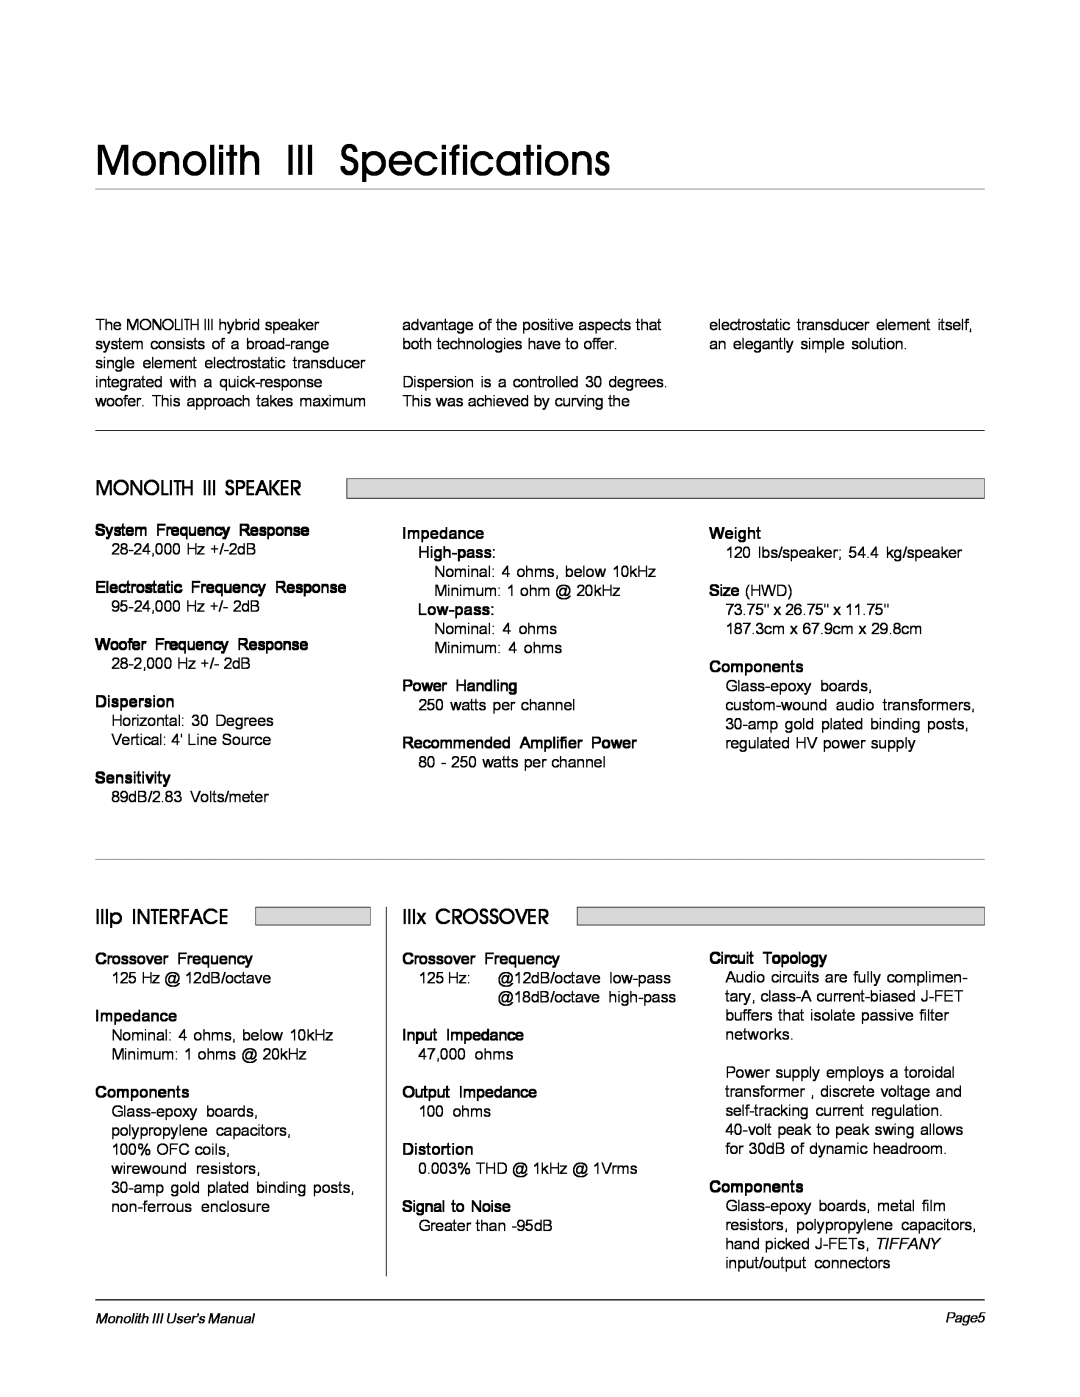 MartinLogan Monolith III Specifications, Monolith Iii Speaker, IIIp INTERFACE, IIIx CROSSOVER, Dispersion, Sensitivity 